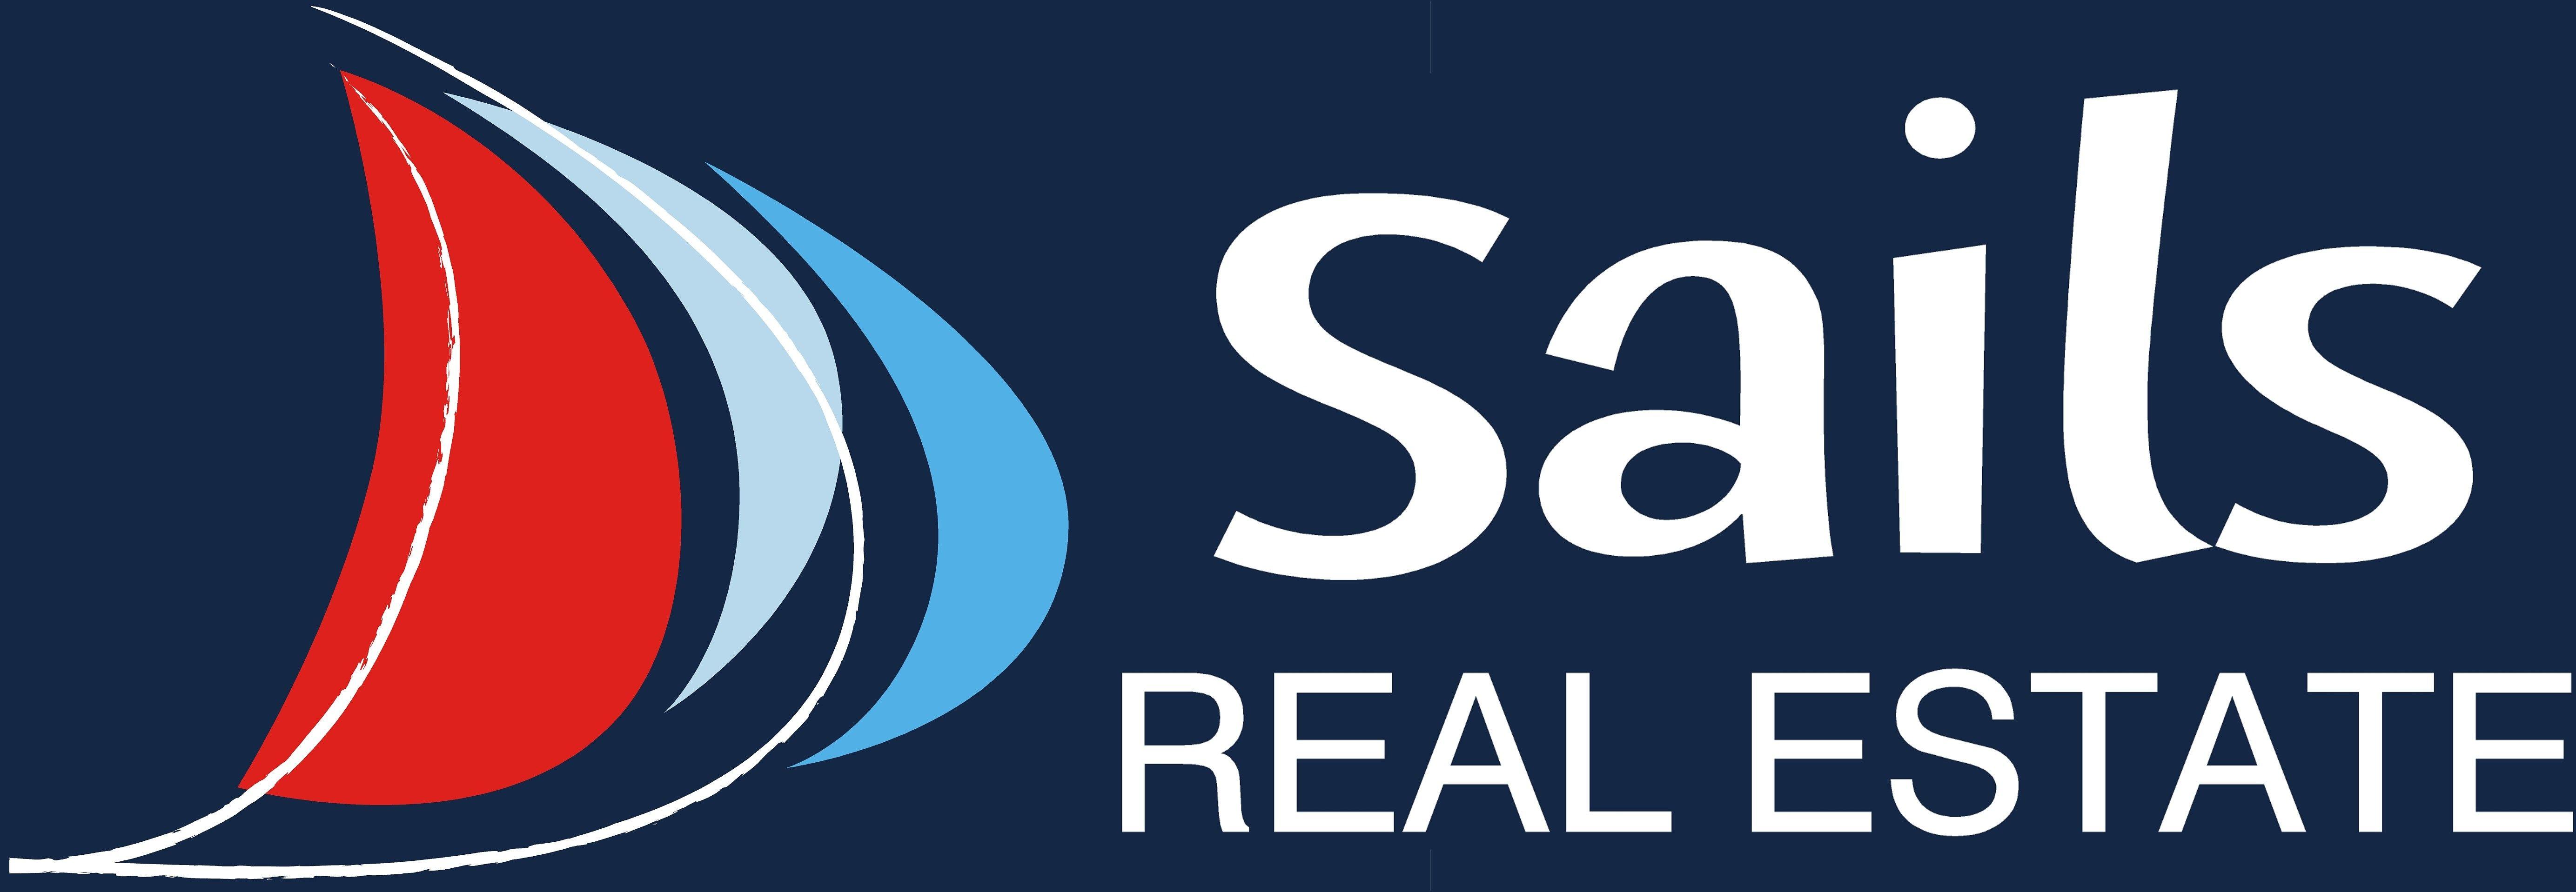 Saips Logo - Homepage - Sails Real Estate